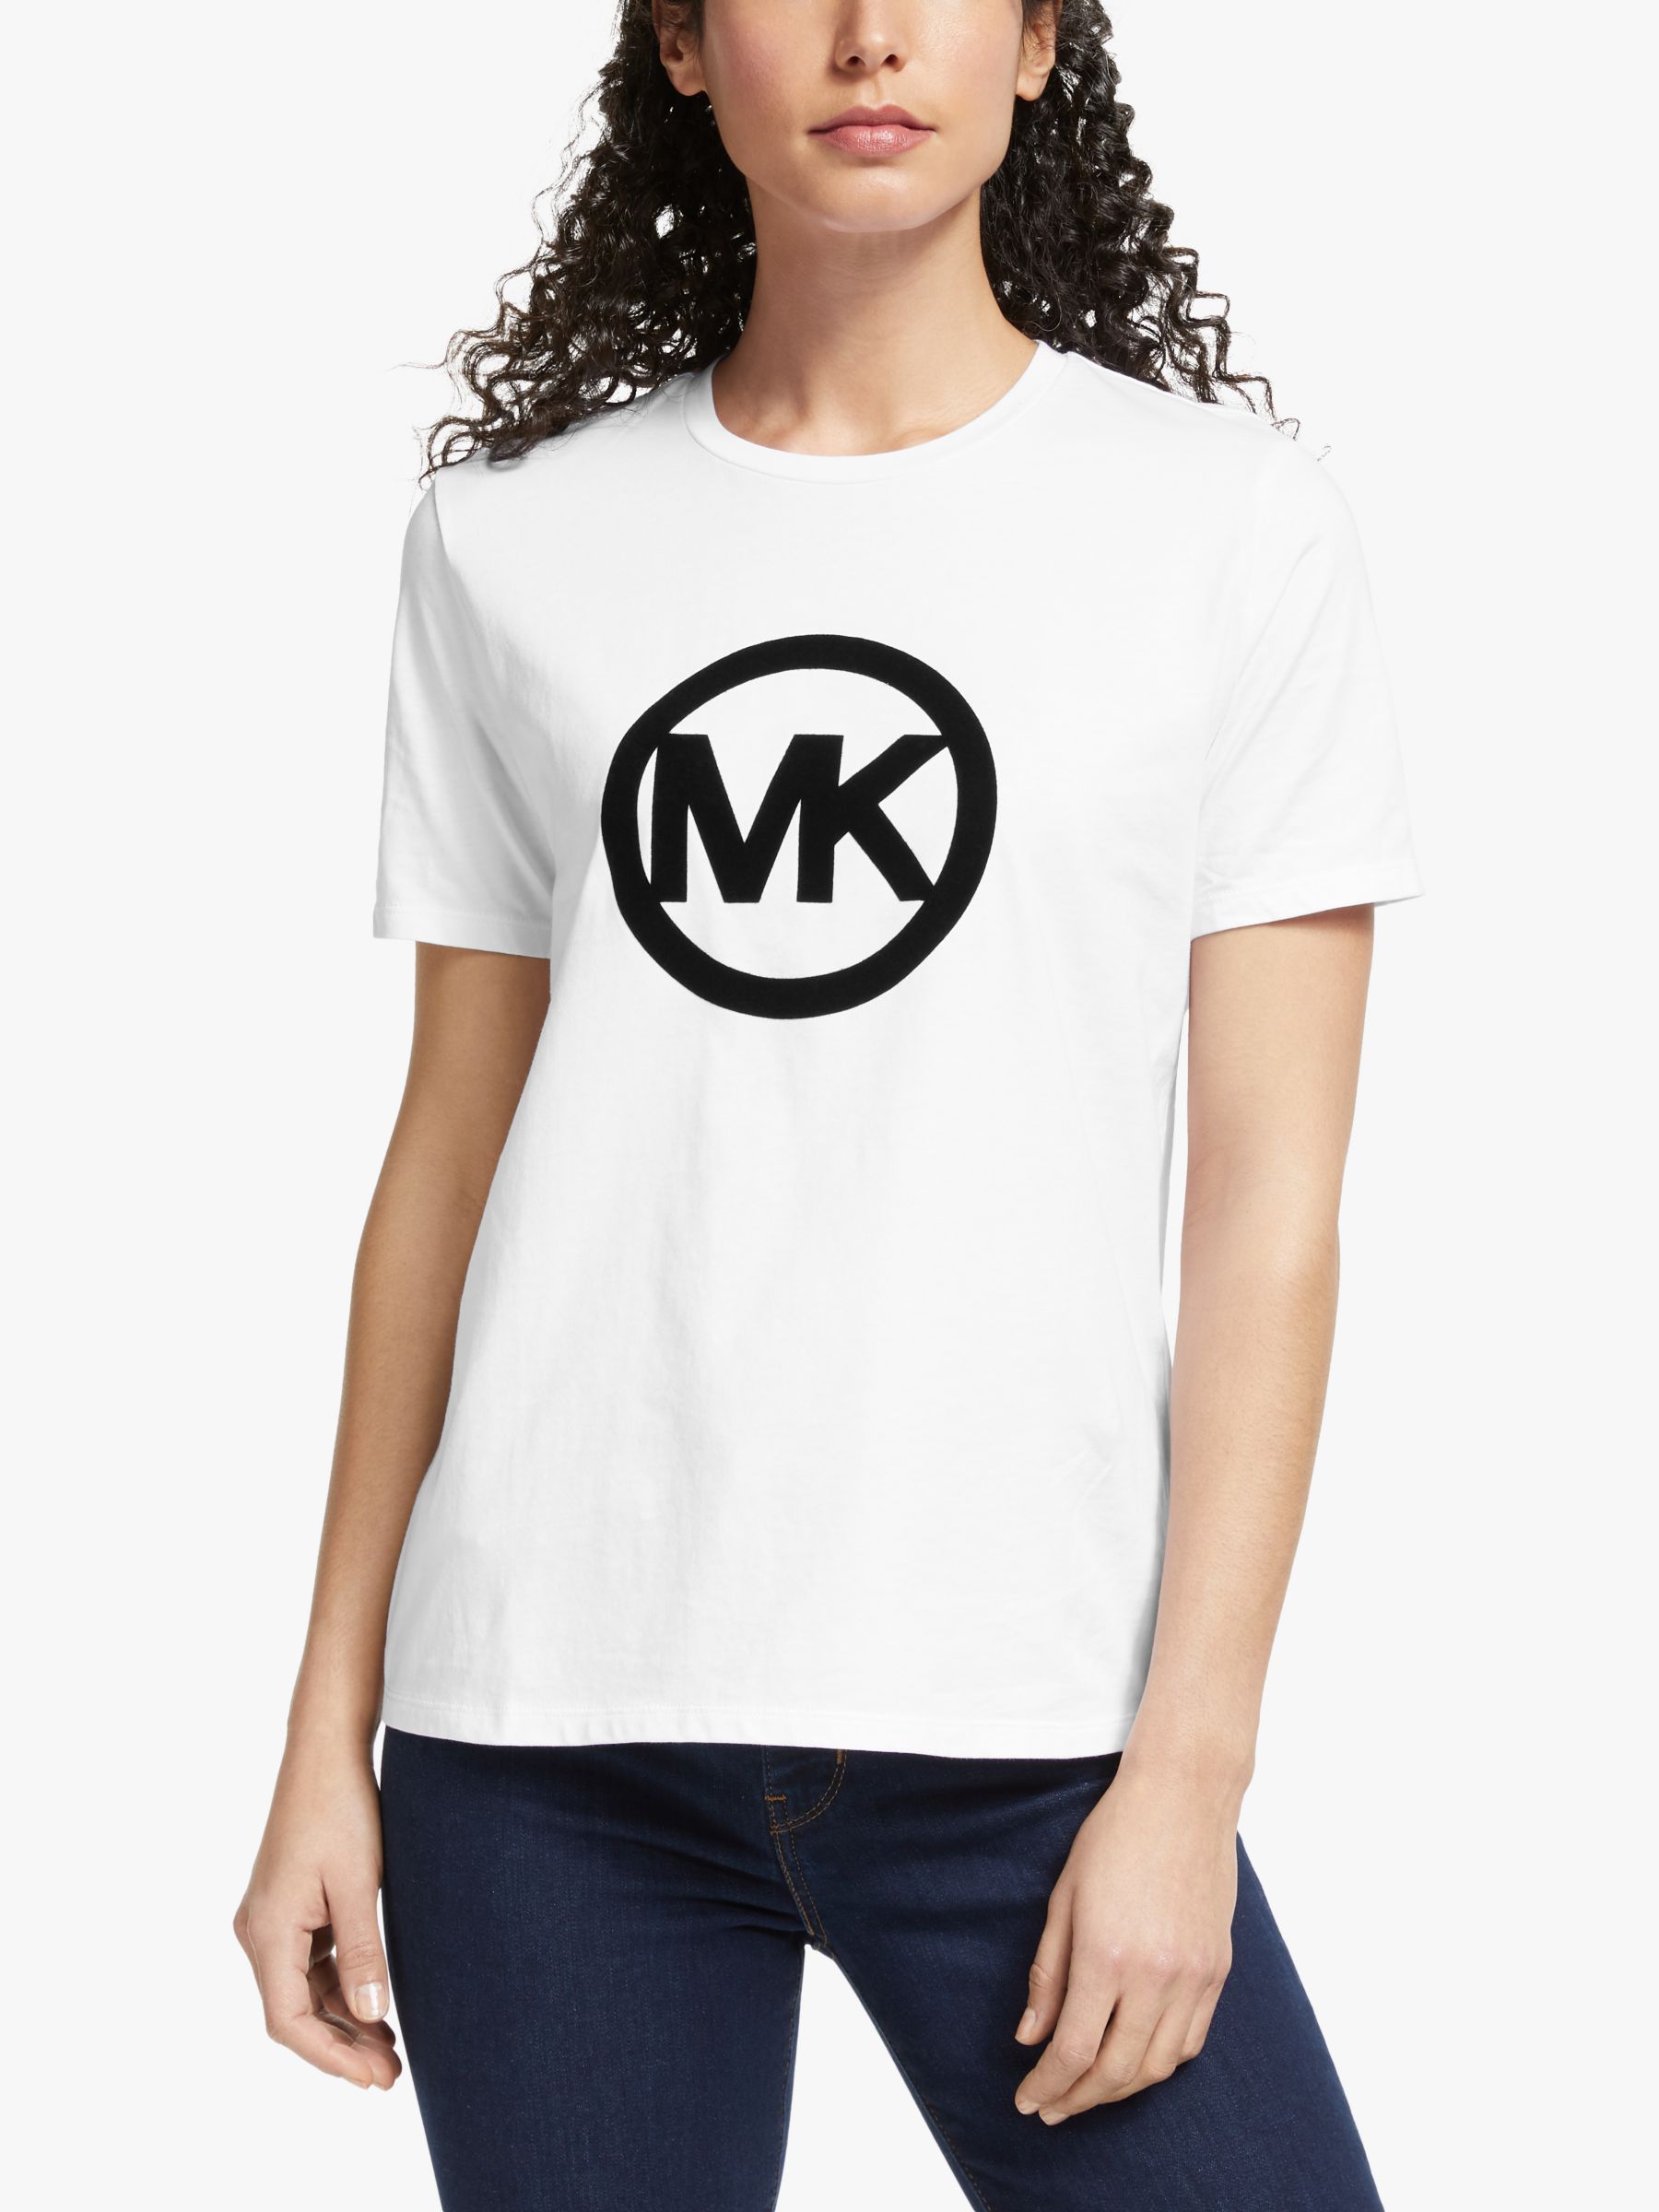 michael kors shirts womens online